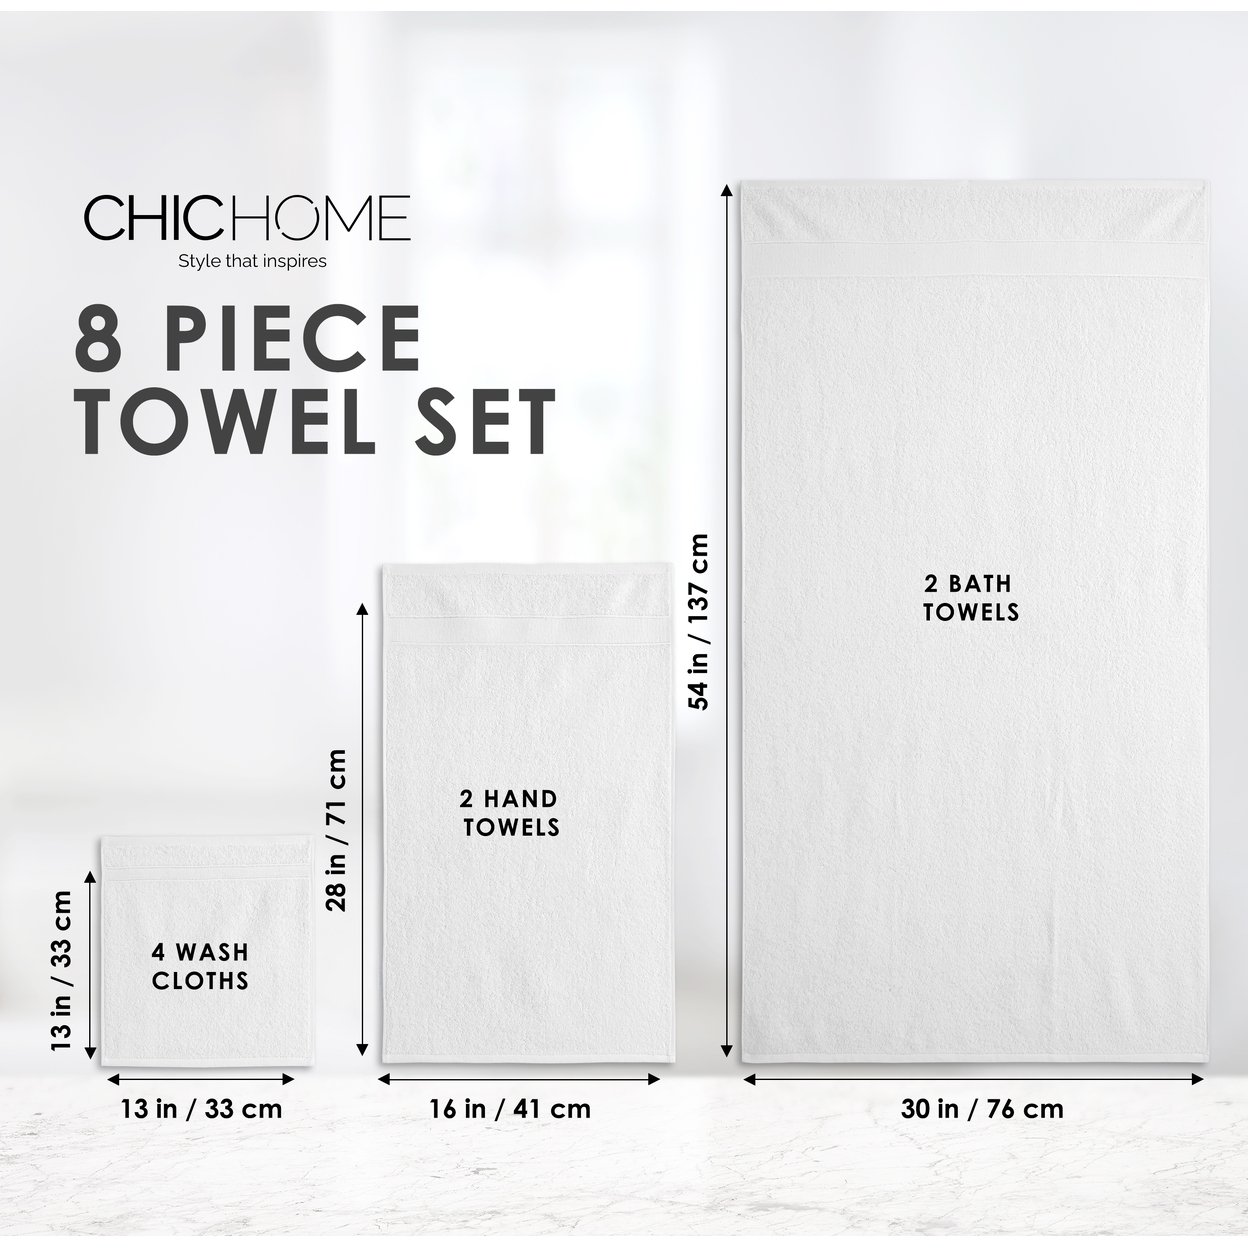 Chic Home Premium 8-Piece 100% Pure Turkish Cotton Towel Set, Woven Dobby Border Design, OEKO-TEX Standard 100 Certified - Beige